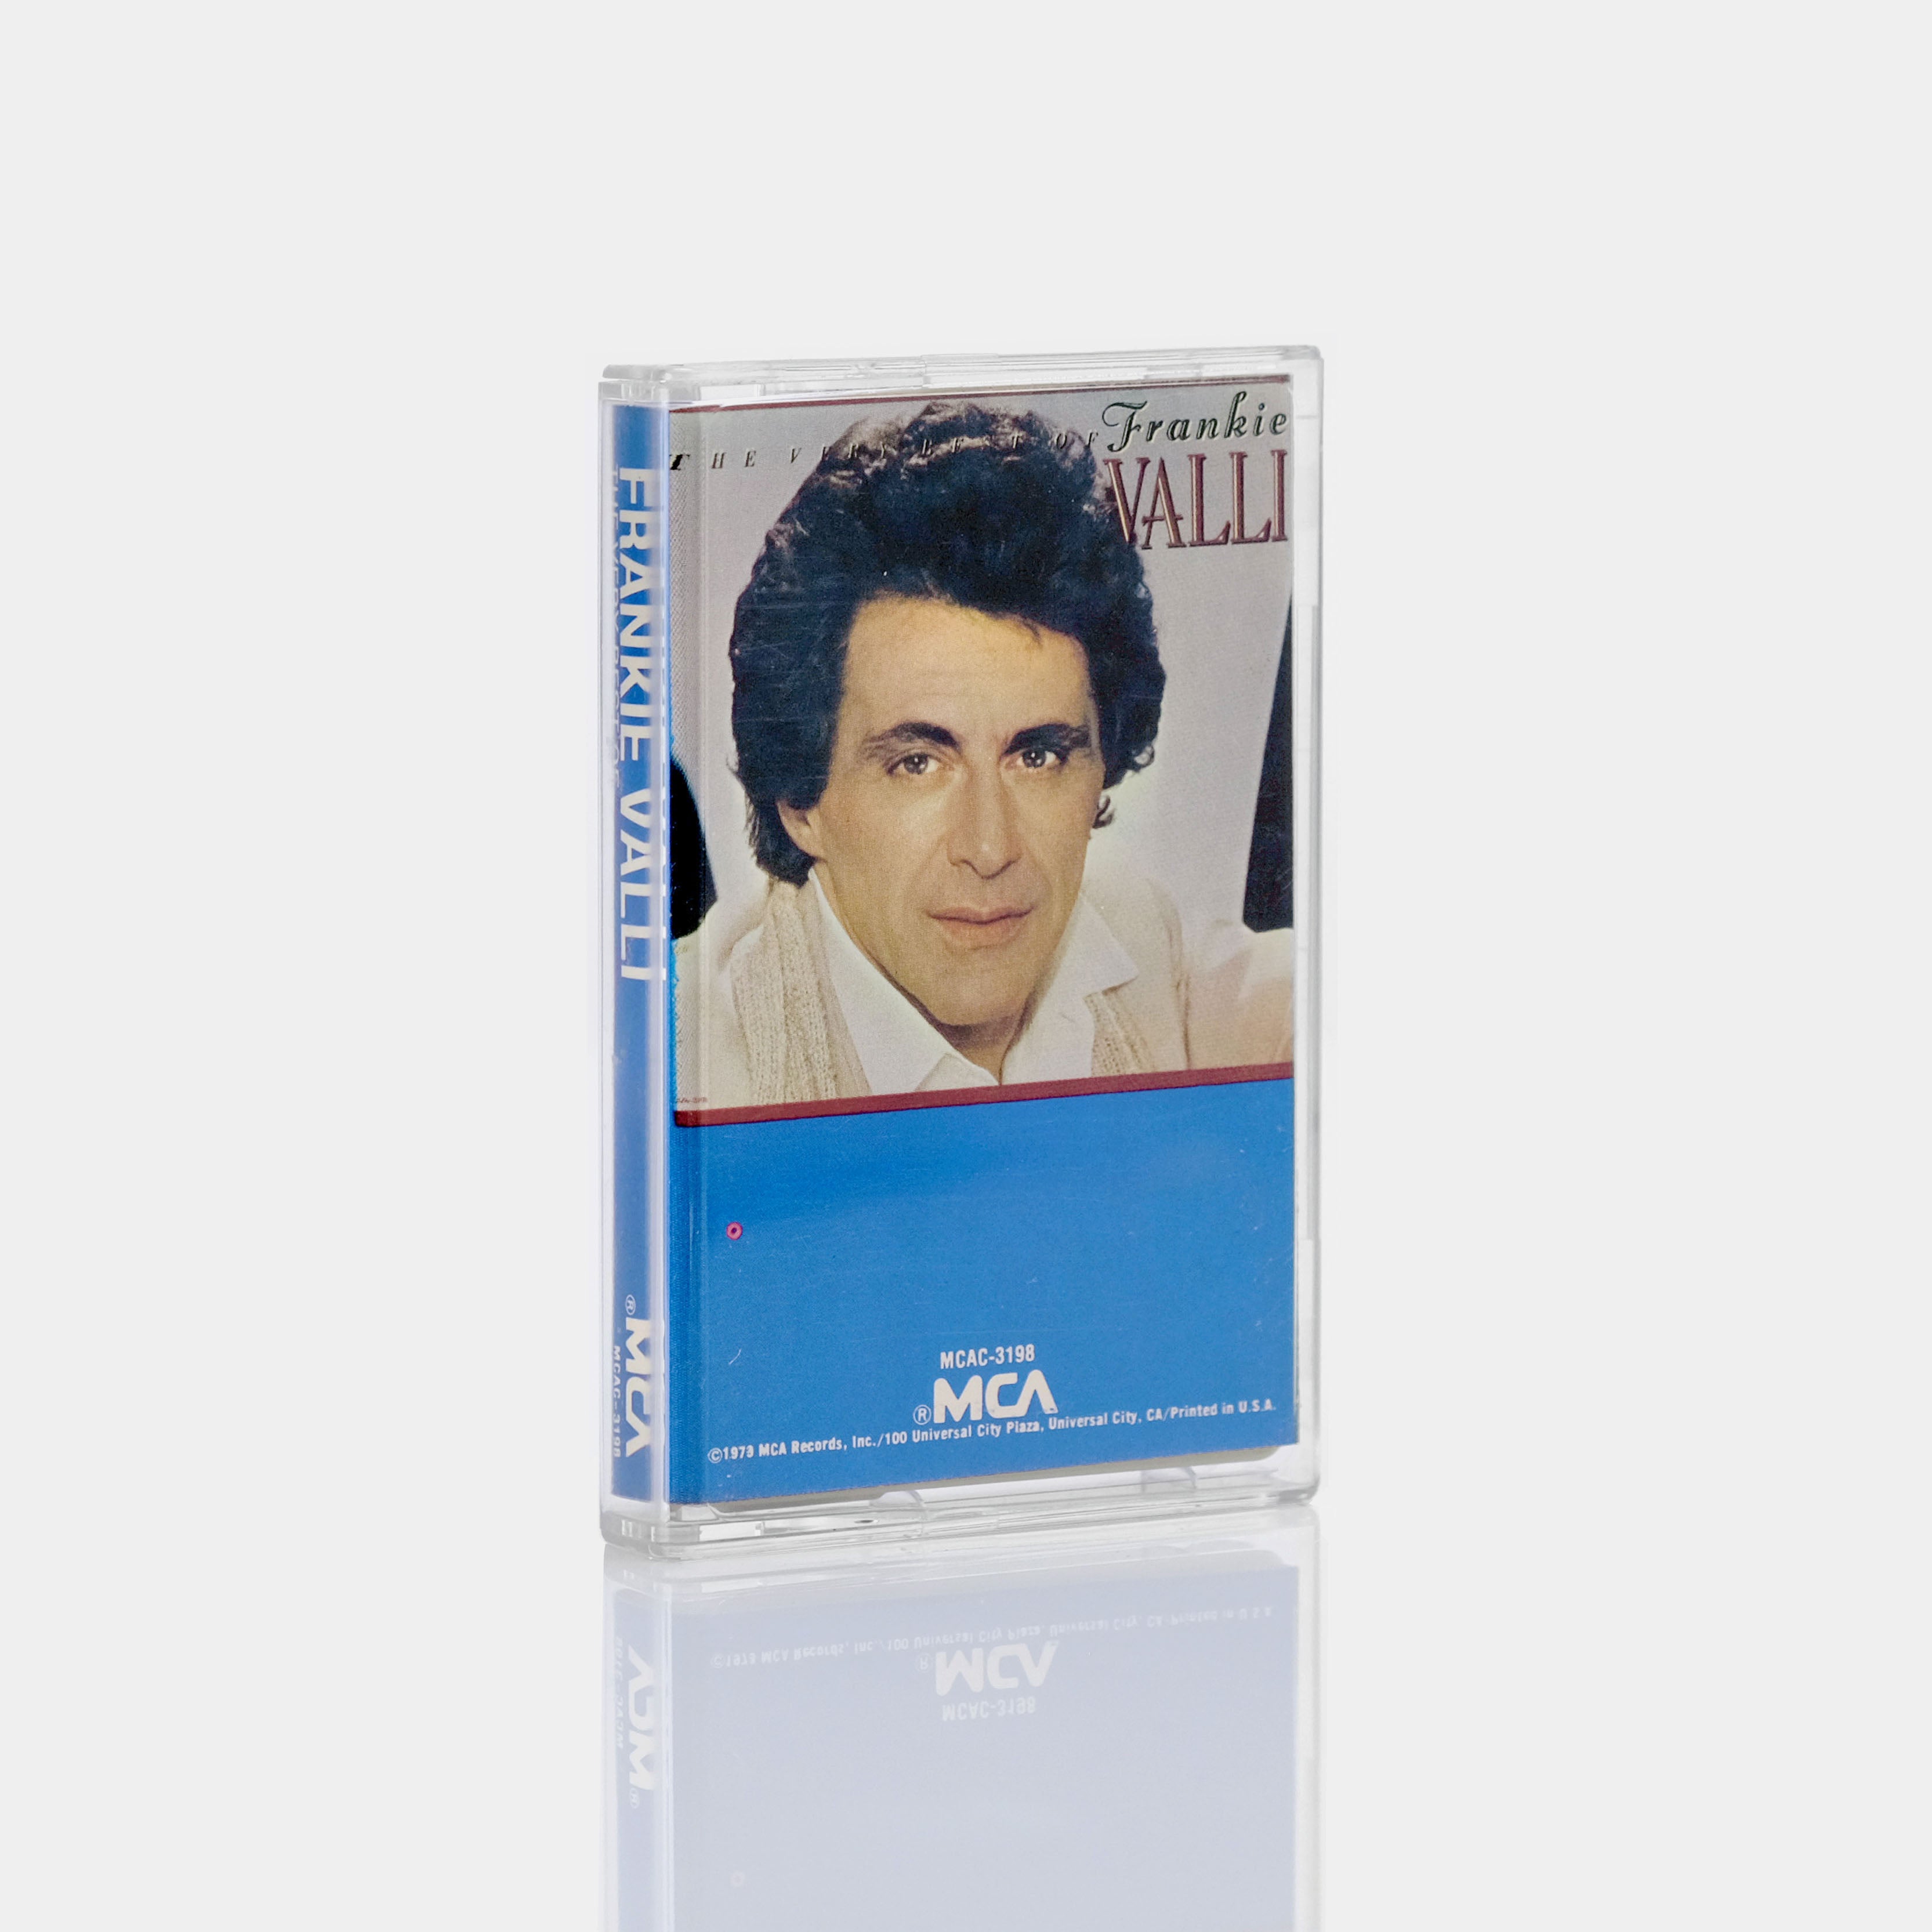 Frankie Valli - The Very Best Of Cassette Tape